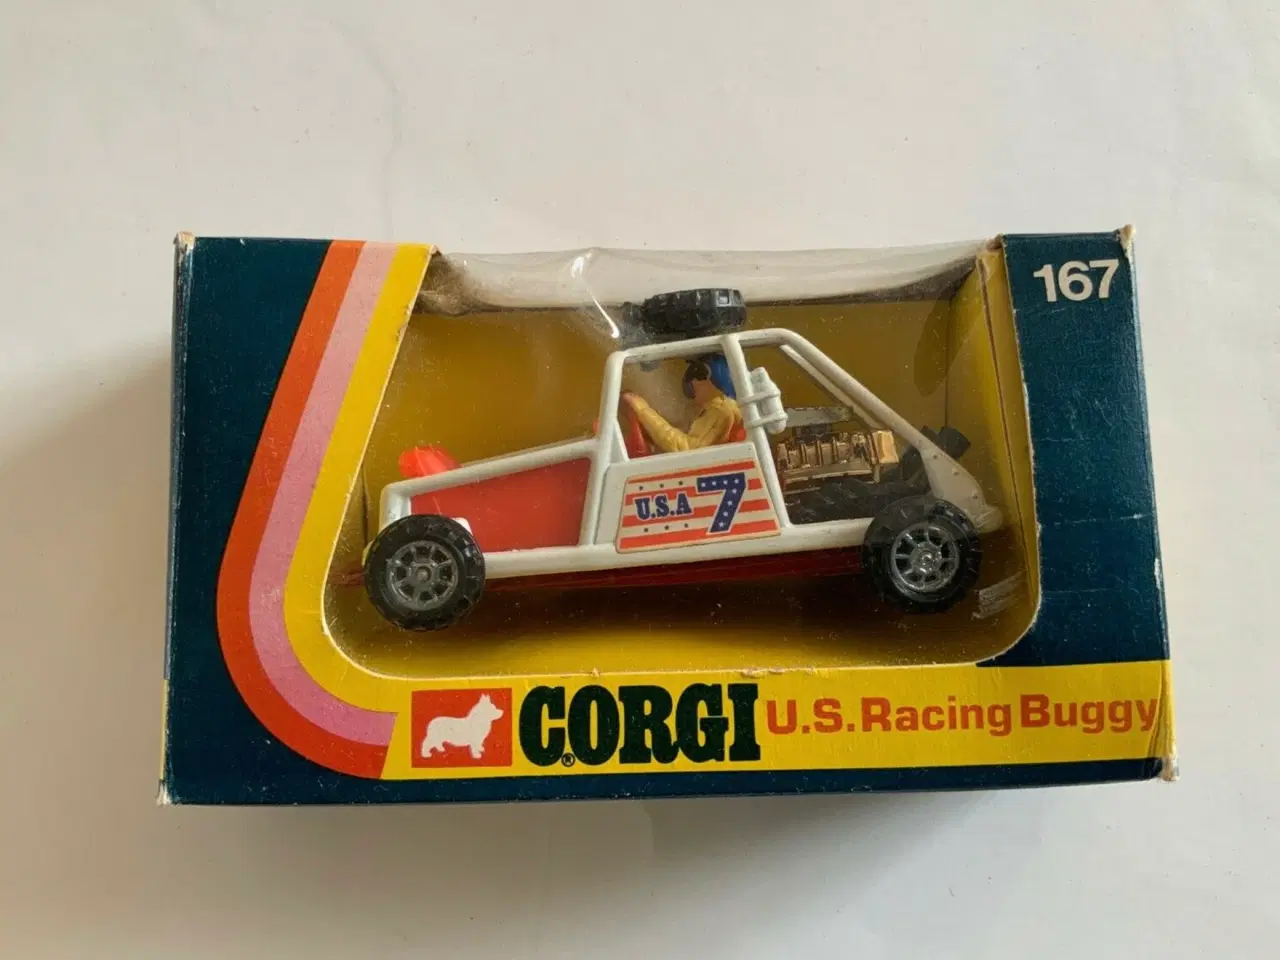 Billede 1 - Corgi Toys No. 167 U.S. Racing Buggy, scale 1:36